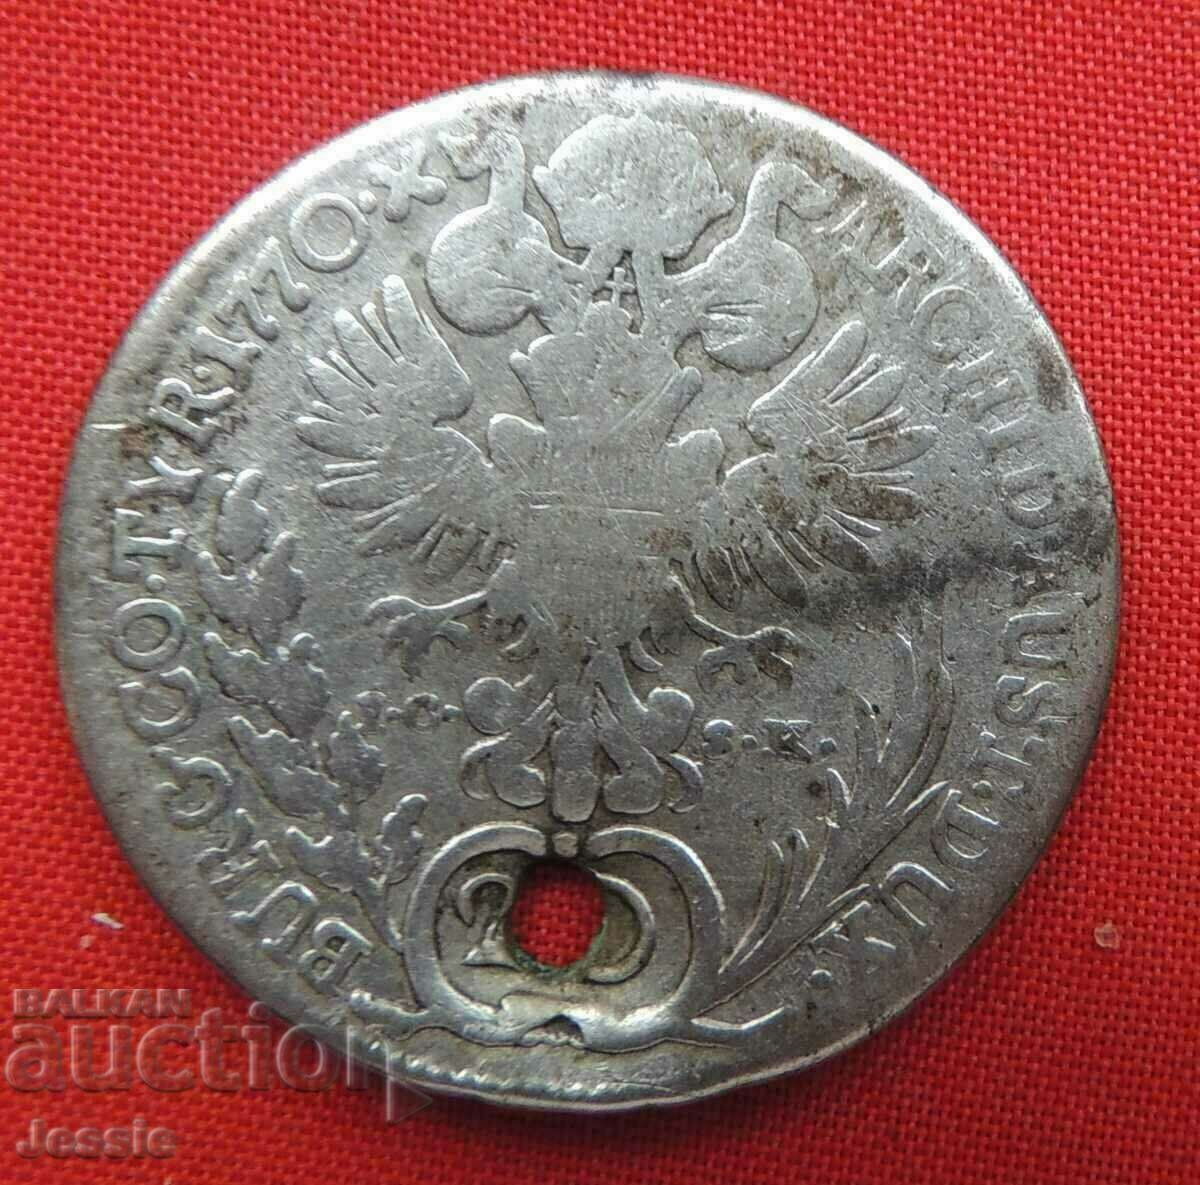 20 Kreuzer 1770 silver (Maria Theresa)